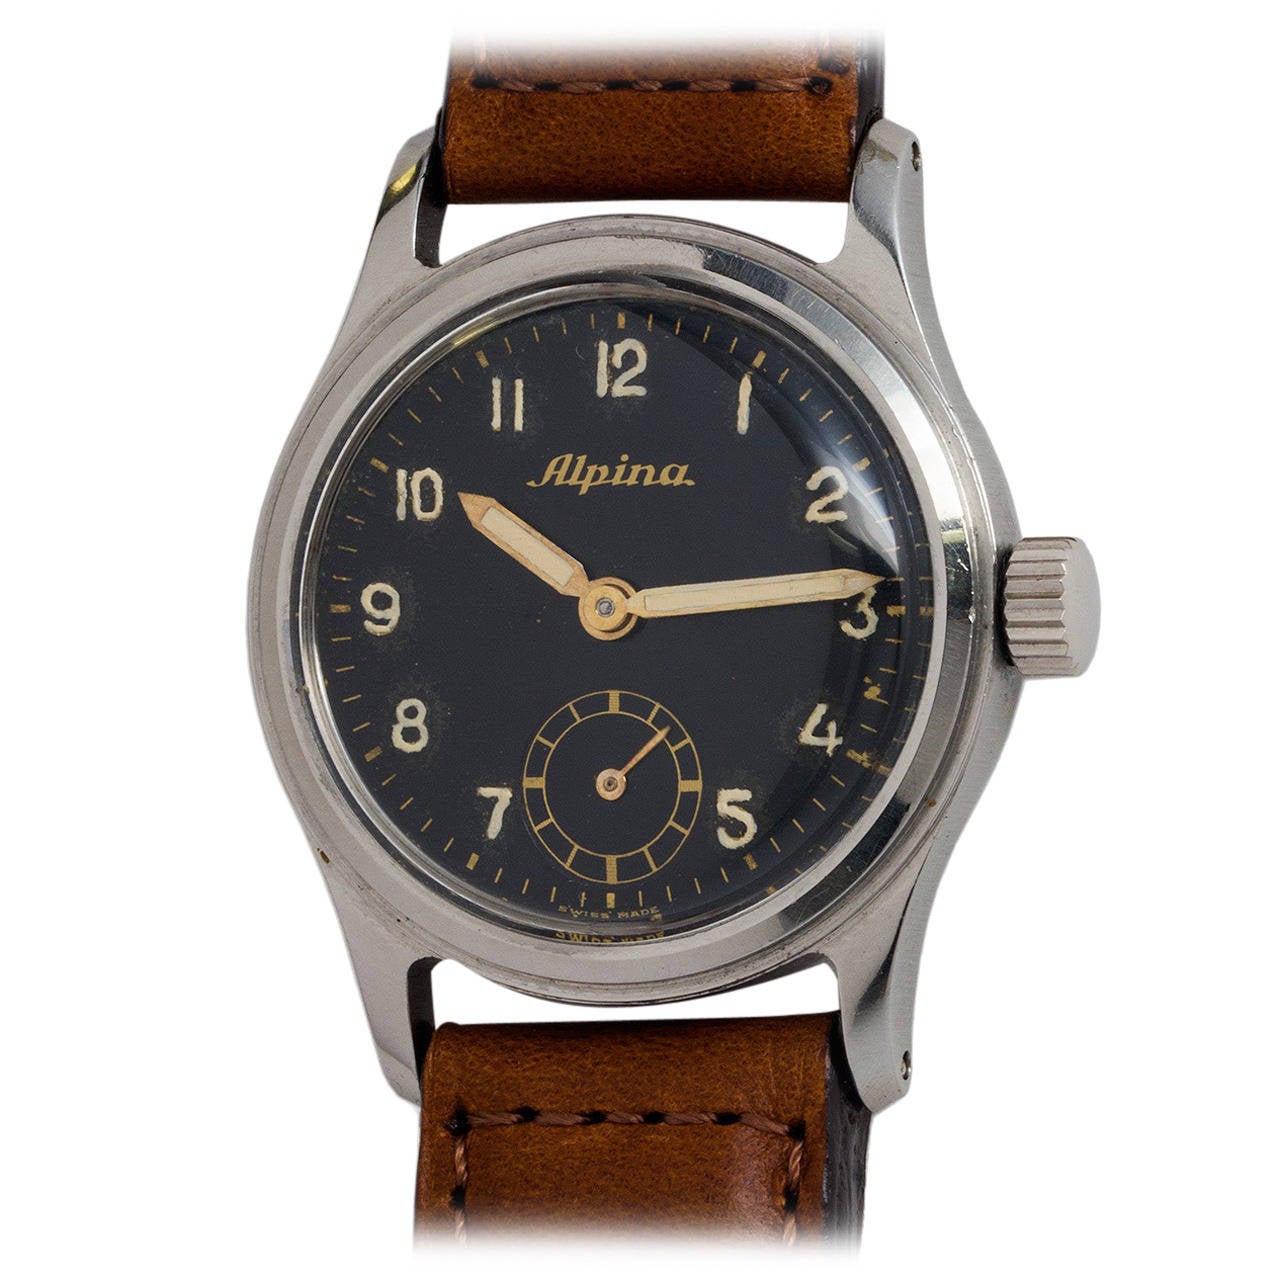 Alpina Stainless Steel Military Wristwatch circa 1940s